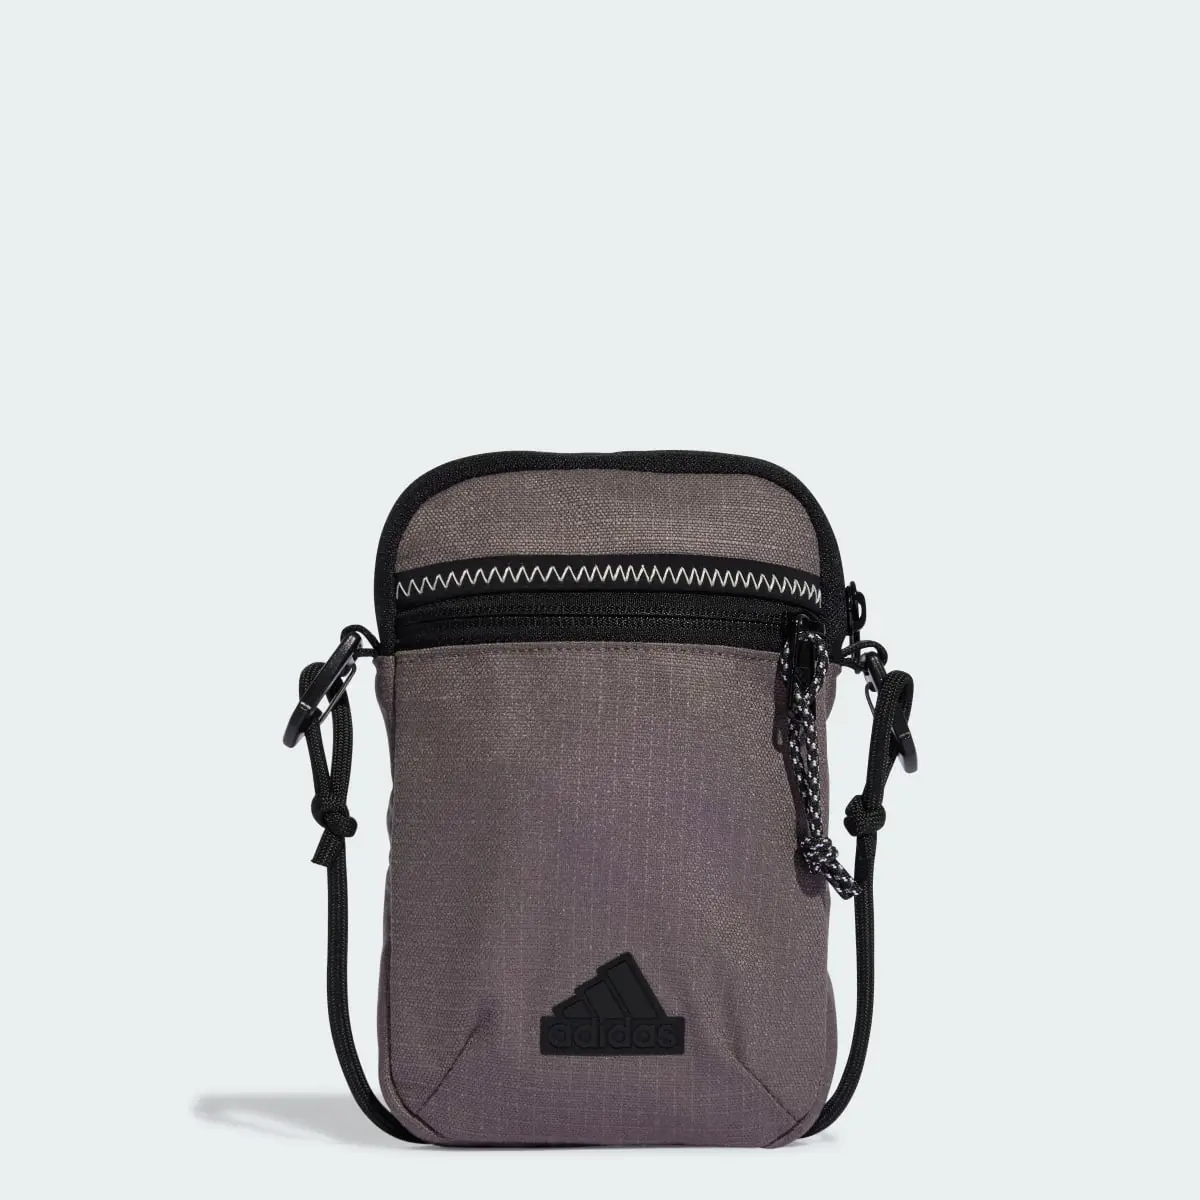 Adidas Xplorer Small Bag. 1